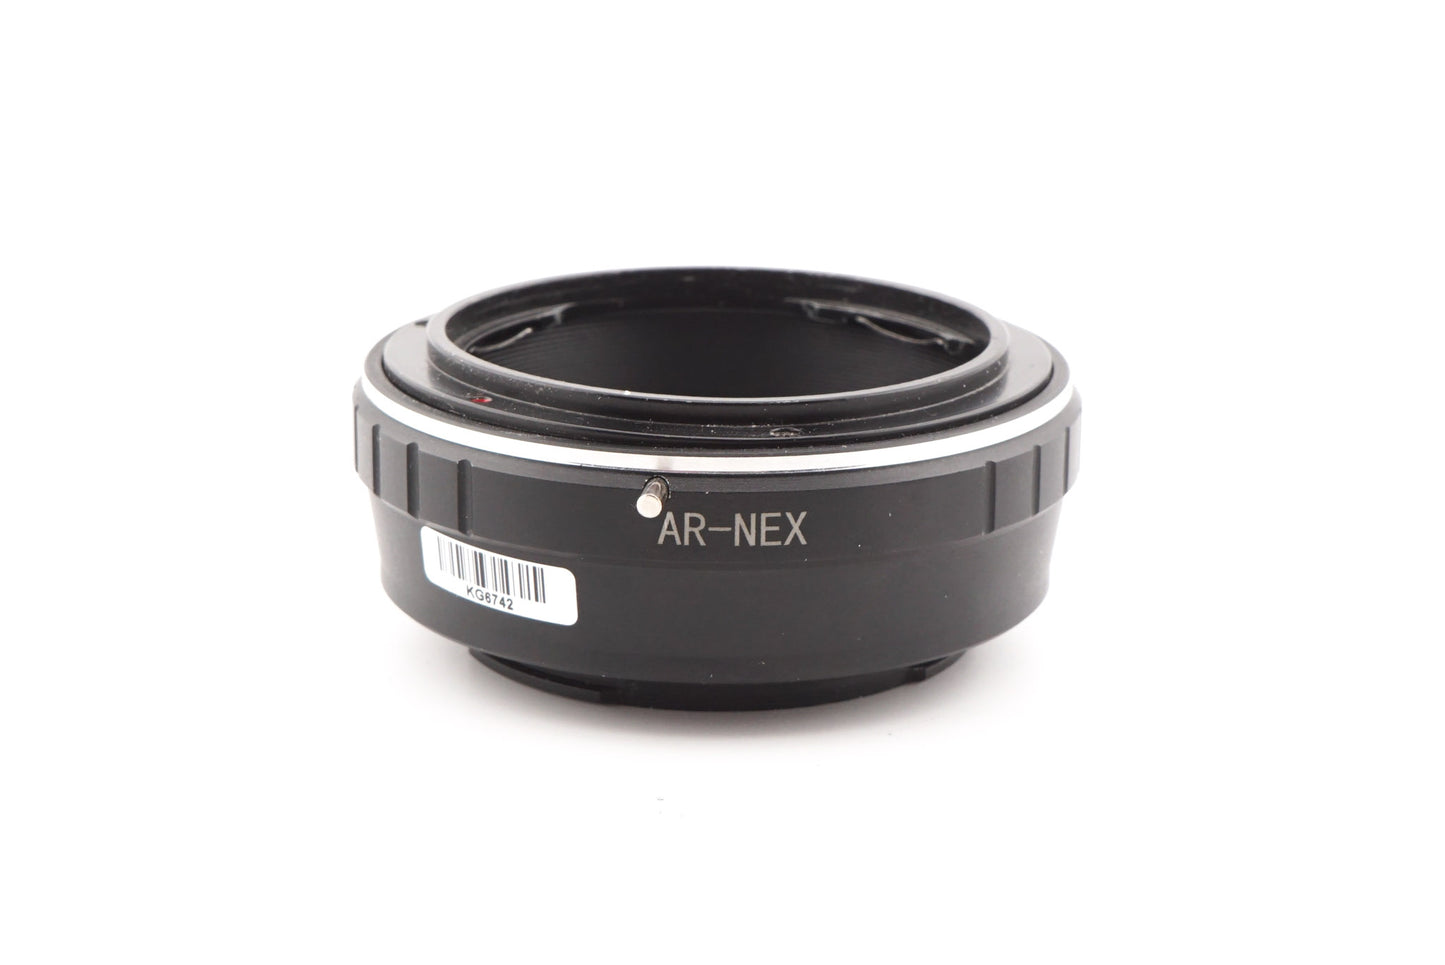 Generic Konica AR - Sony E (AR-NEX) Adapter - Lens Adapter